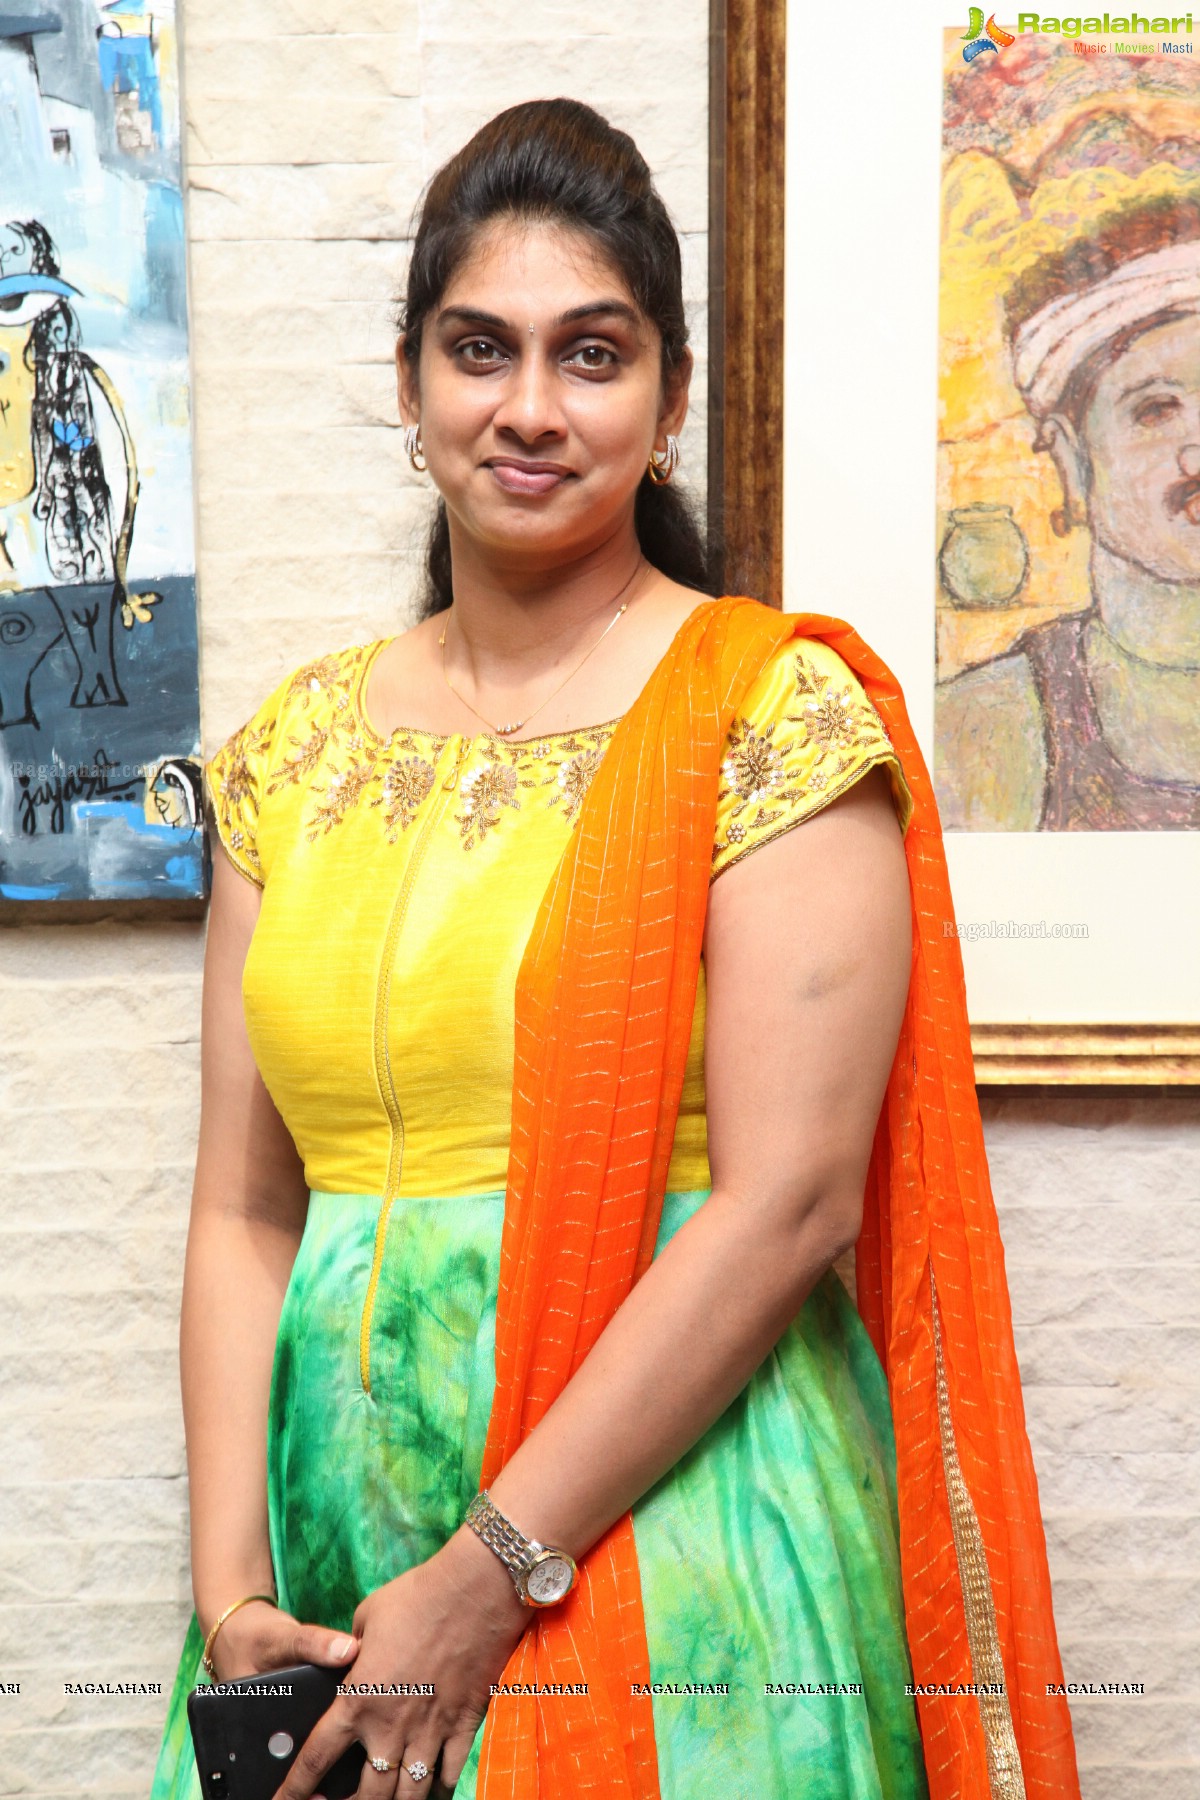 Diksha Panth inagurates Sashi Nahata's Akritti Elite Exhibition & Sale (April 2017) at Park Hyatt, Hyderabad